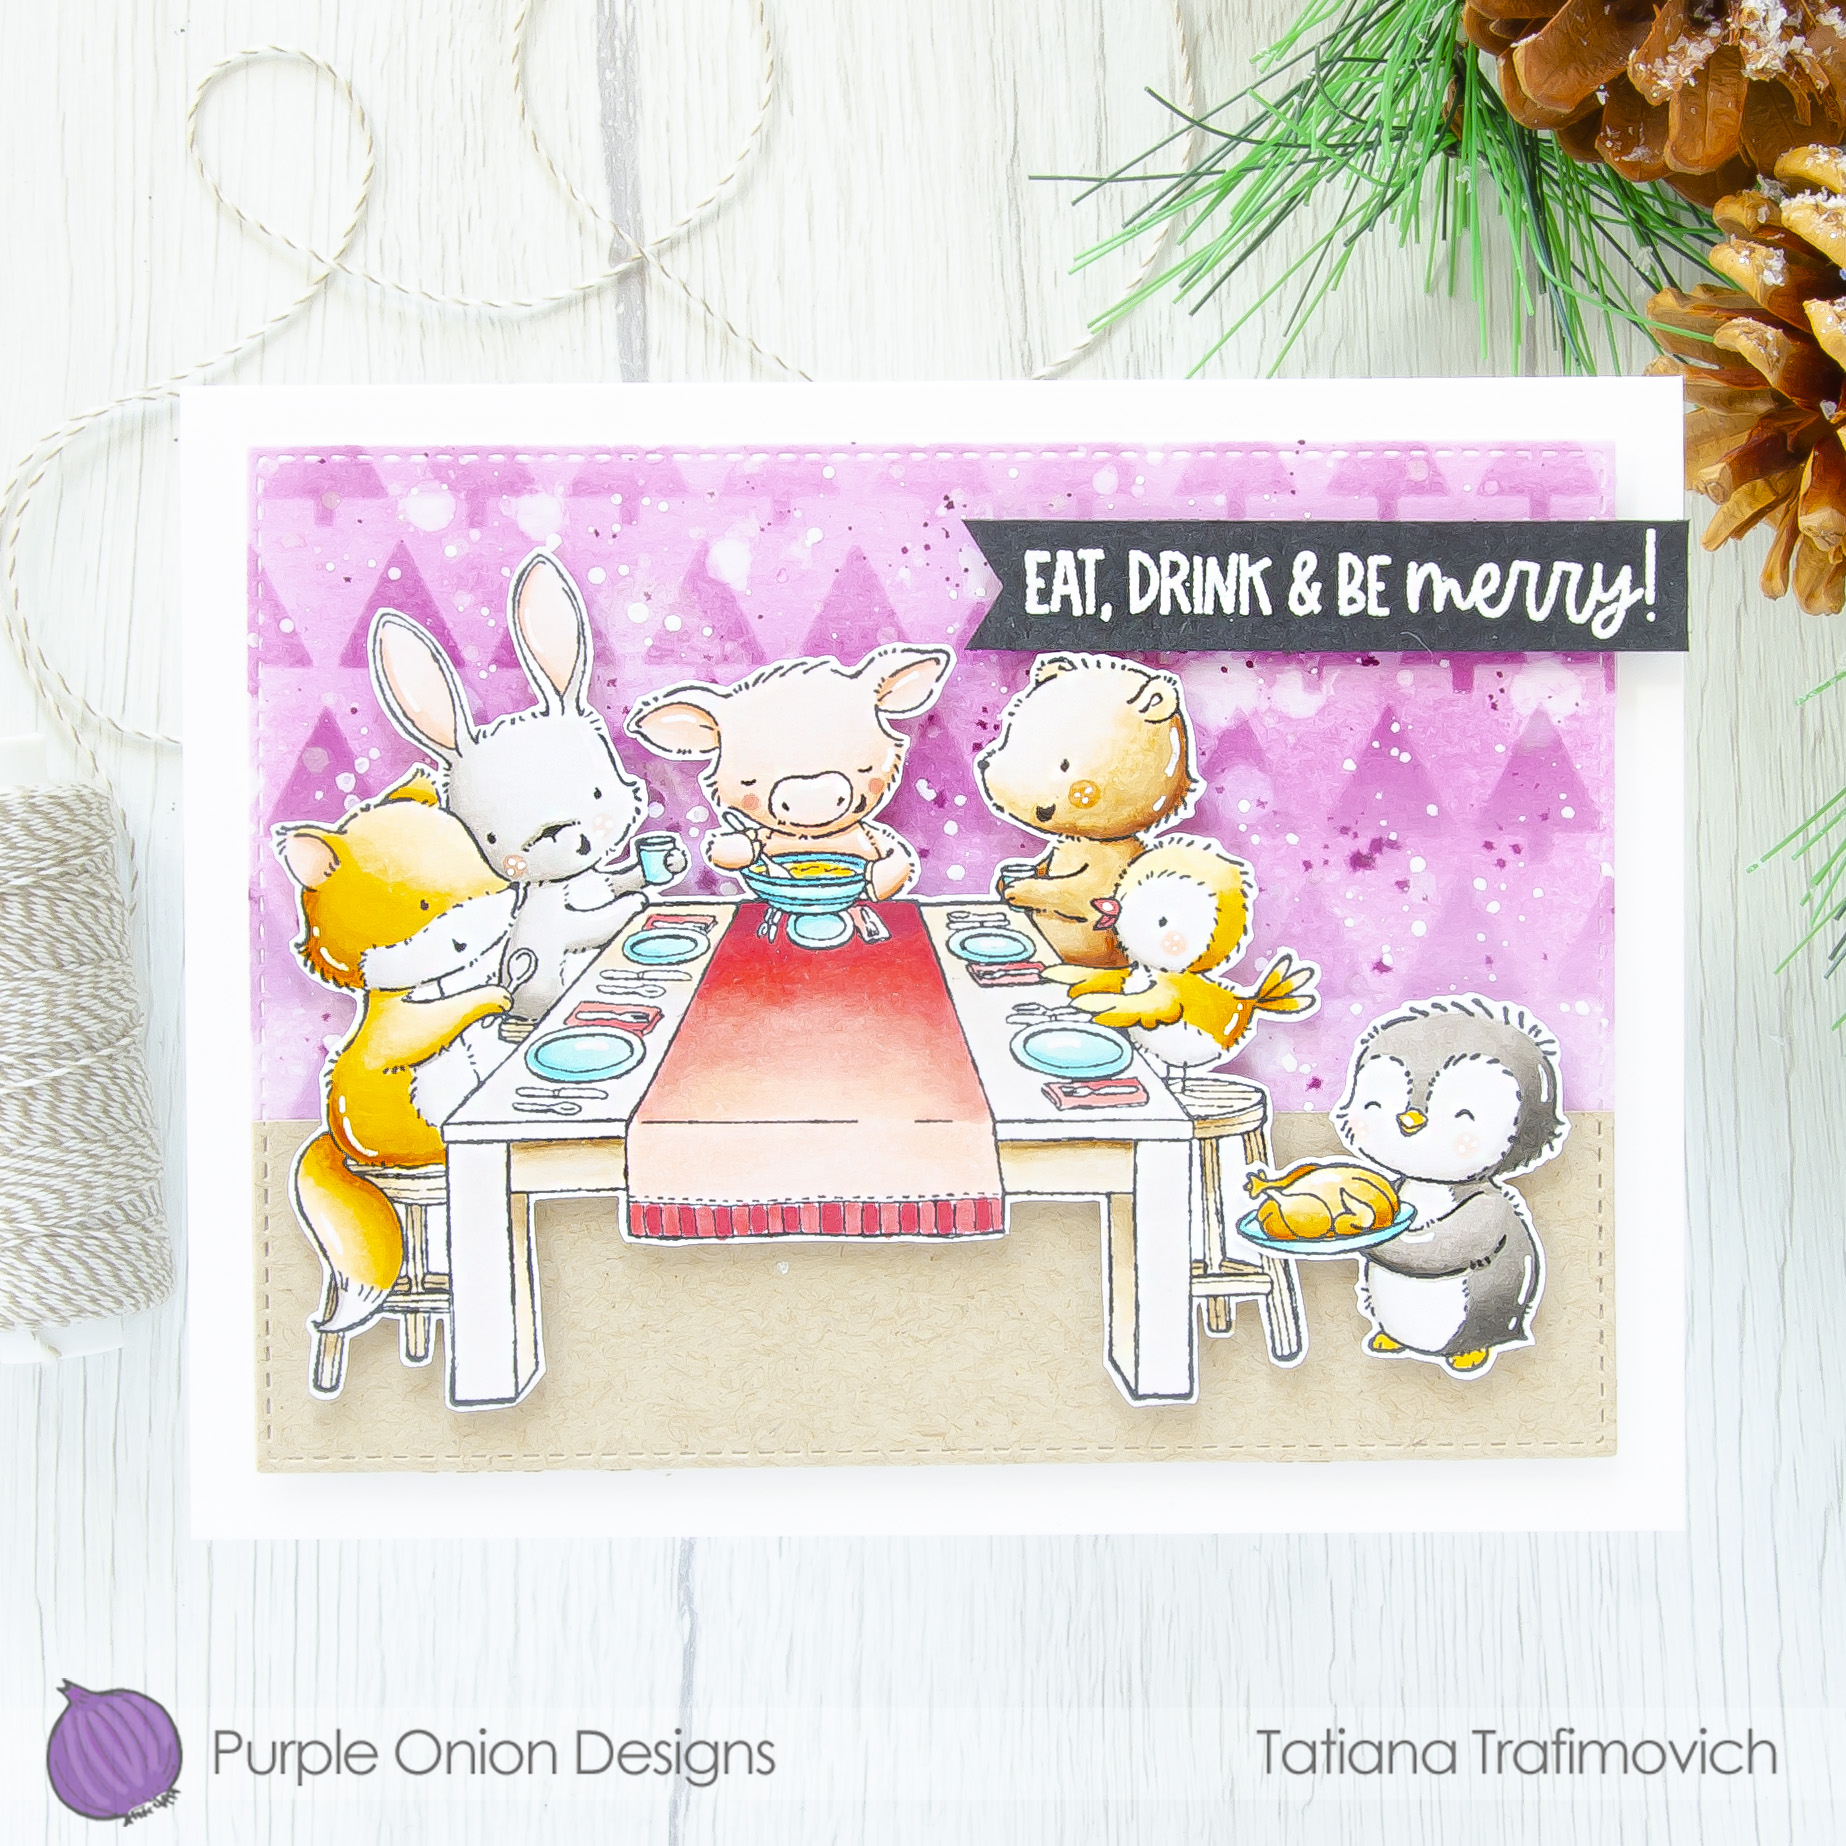 Eat, Drink & Be Merry #handmade card by Tatiana Trafimovich #tatianacraftandart - stamps by Purple Onion Designs